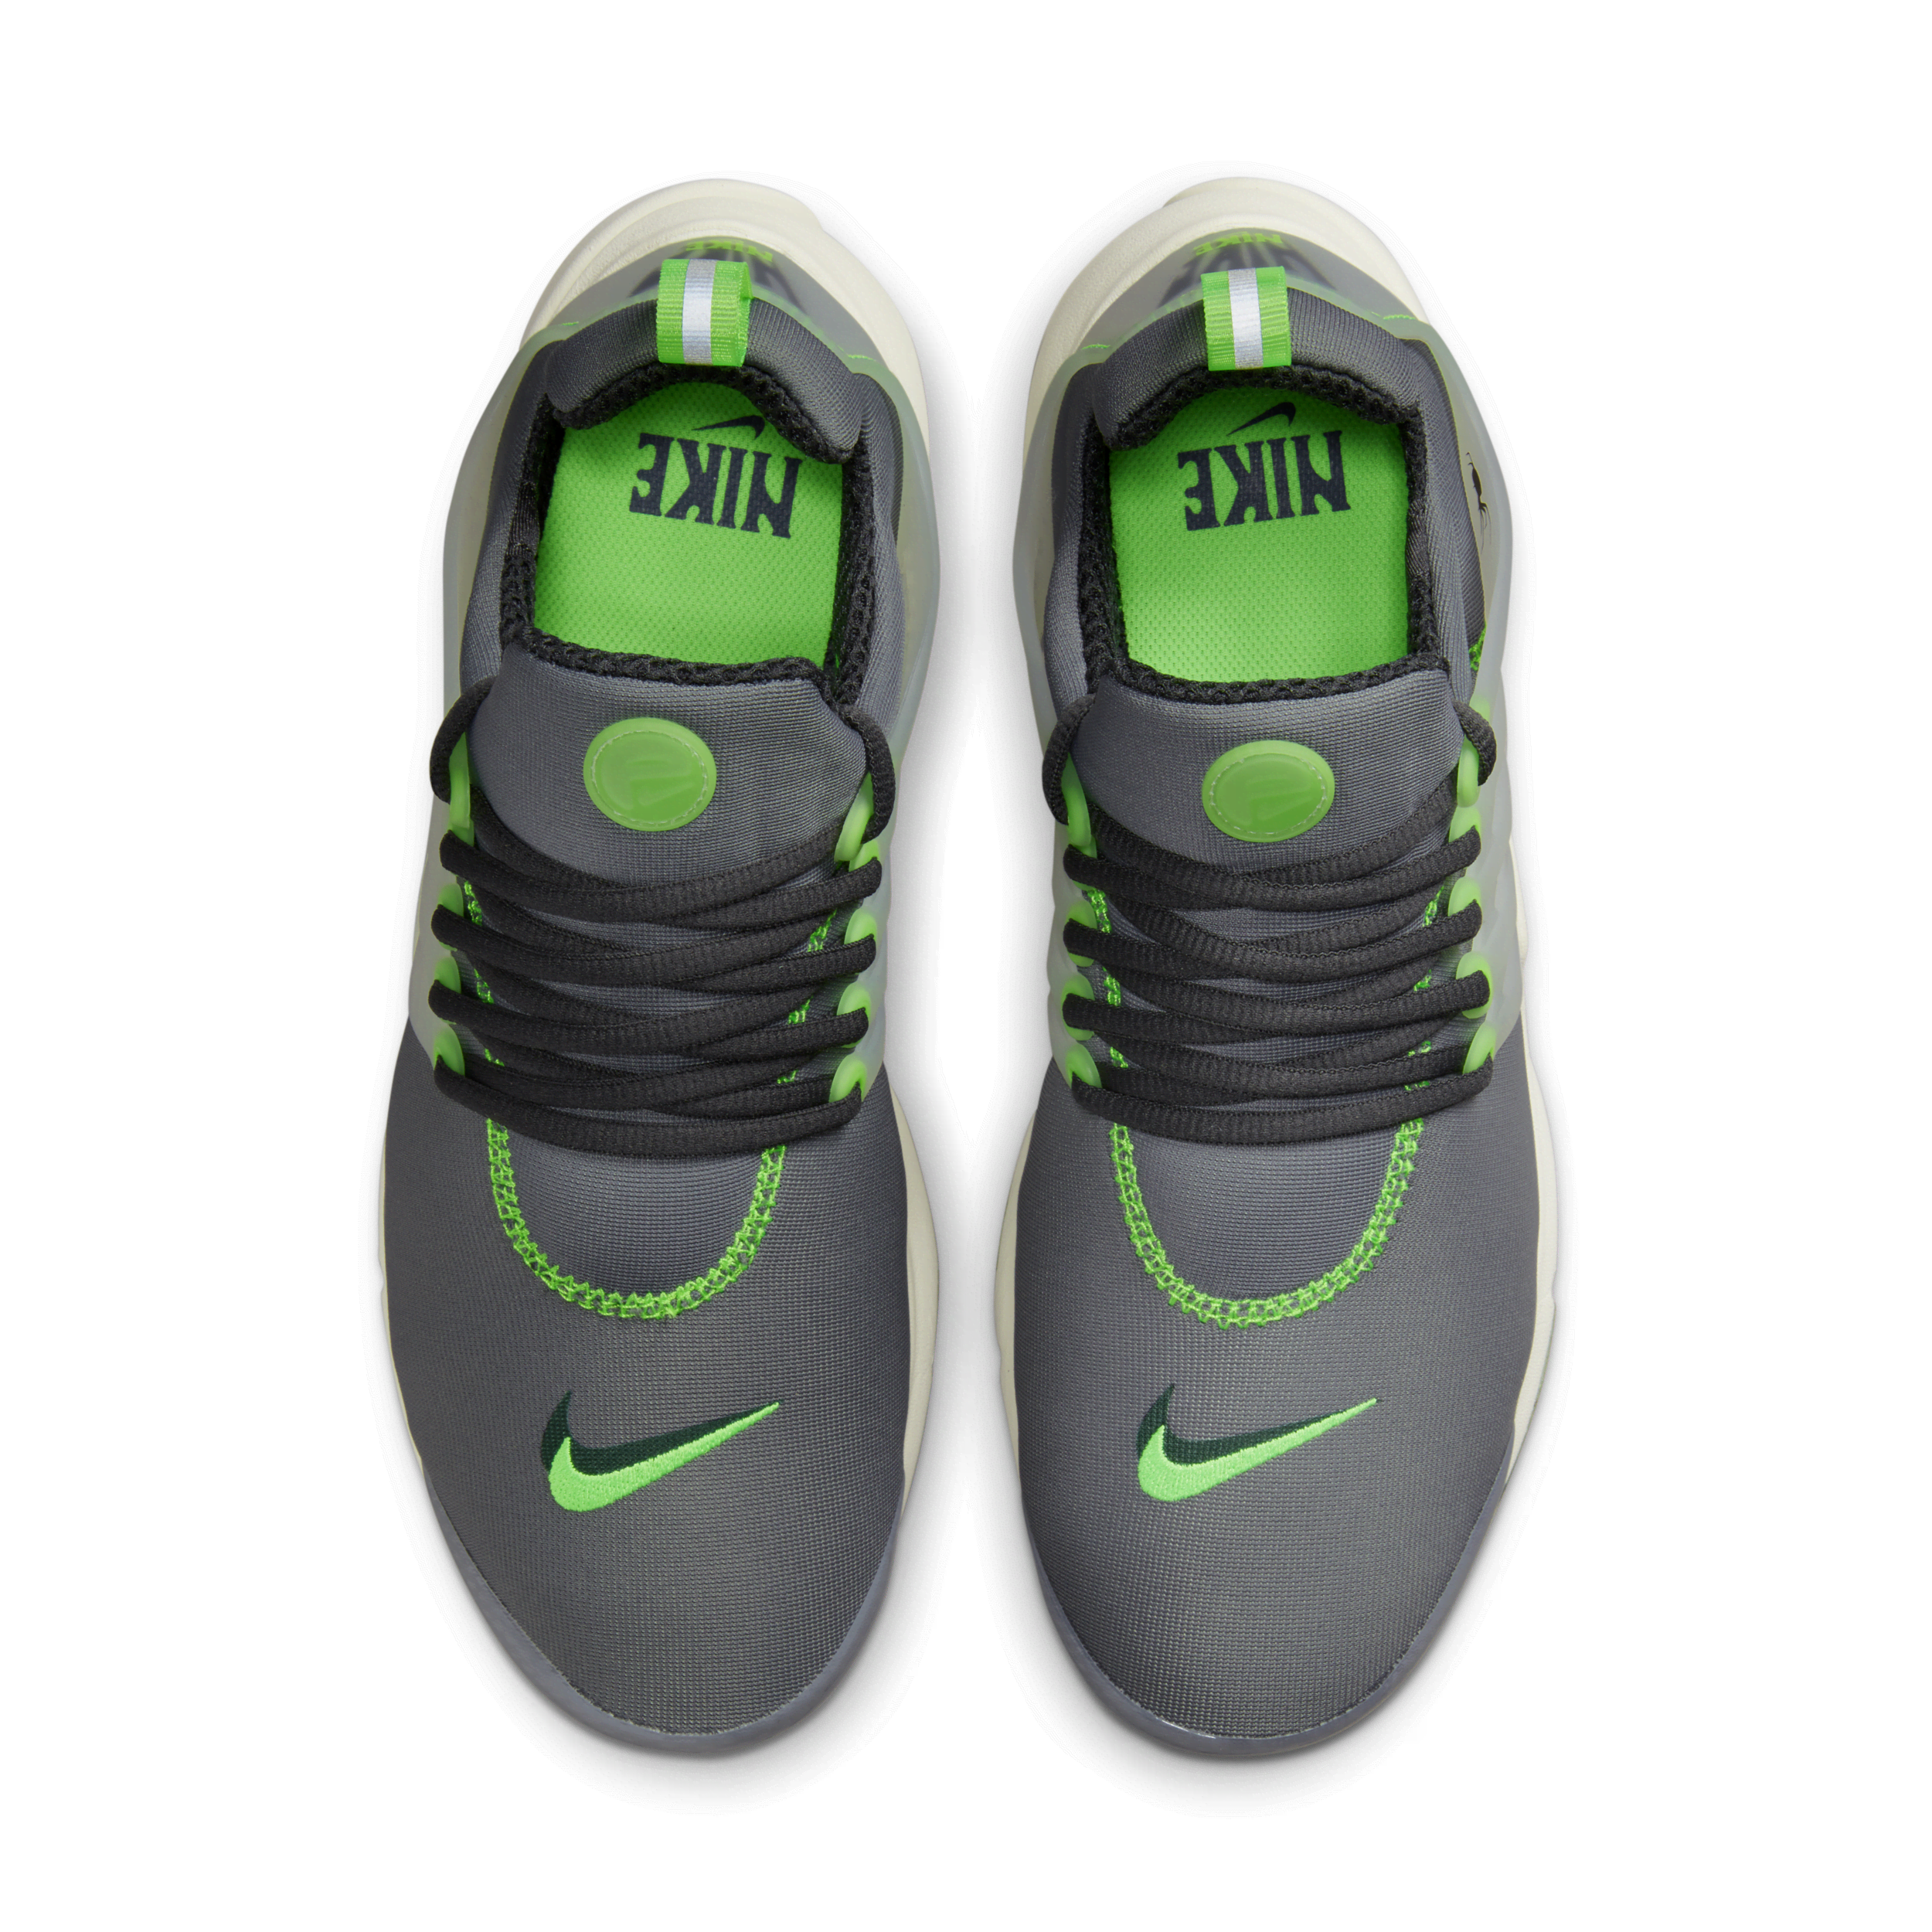 Nike Air Presto Premium Herrenschuh - Grau